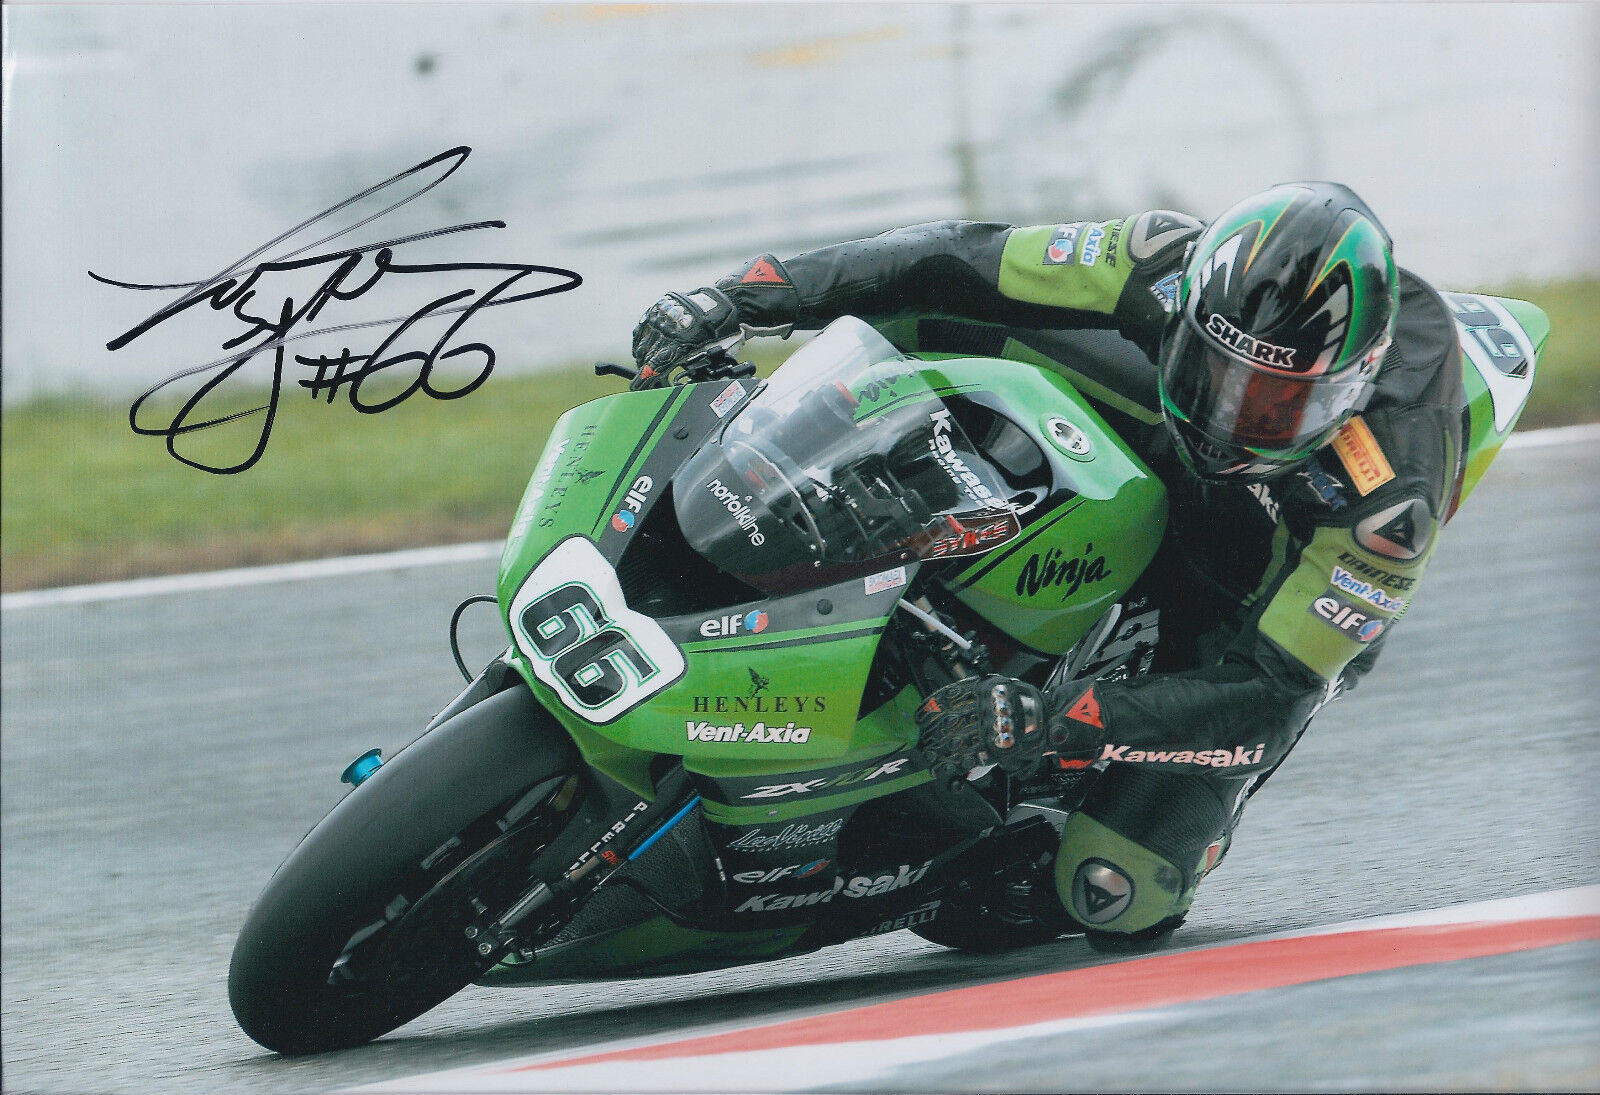 Tom SYKES SIGNED KAWASAKI 12x8 Photo Poster painting AFTAL Autograph COA Genuine Superbikes